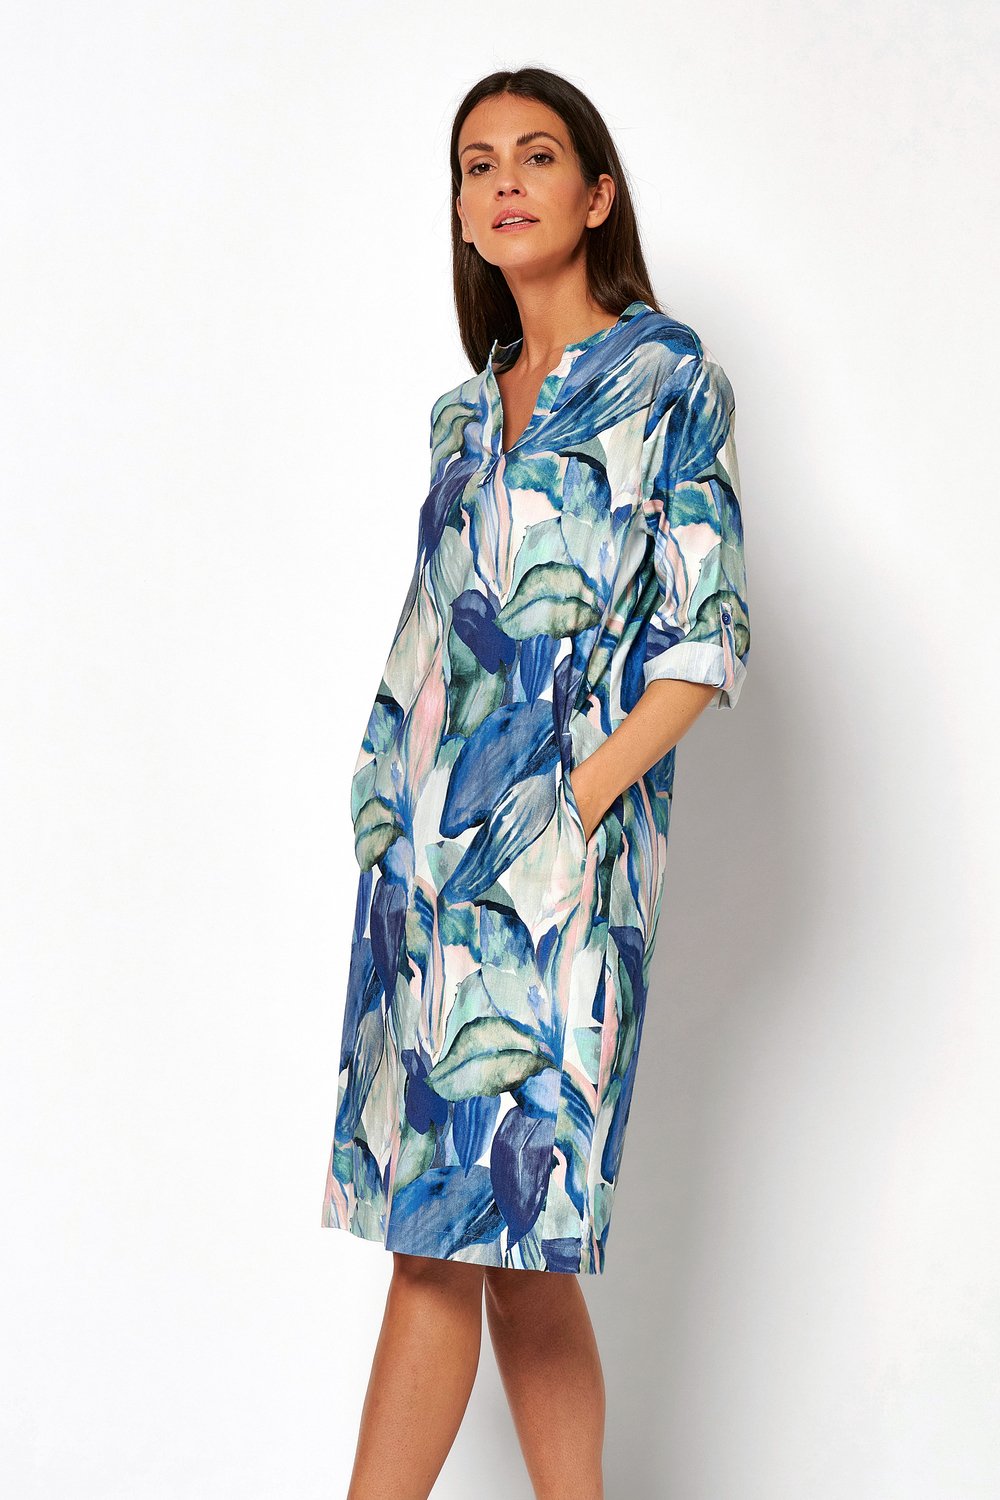 Linen dress with a tropic print | Style »Mali« multicolour blue